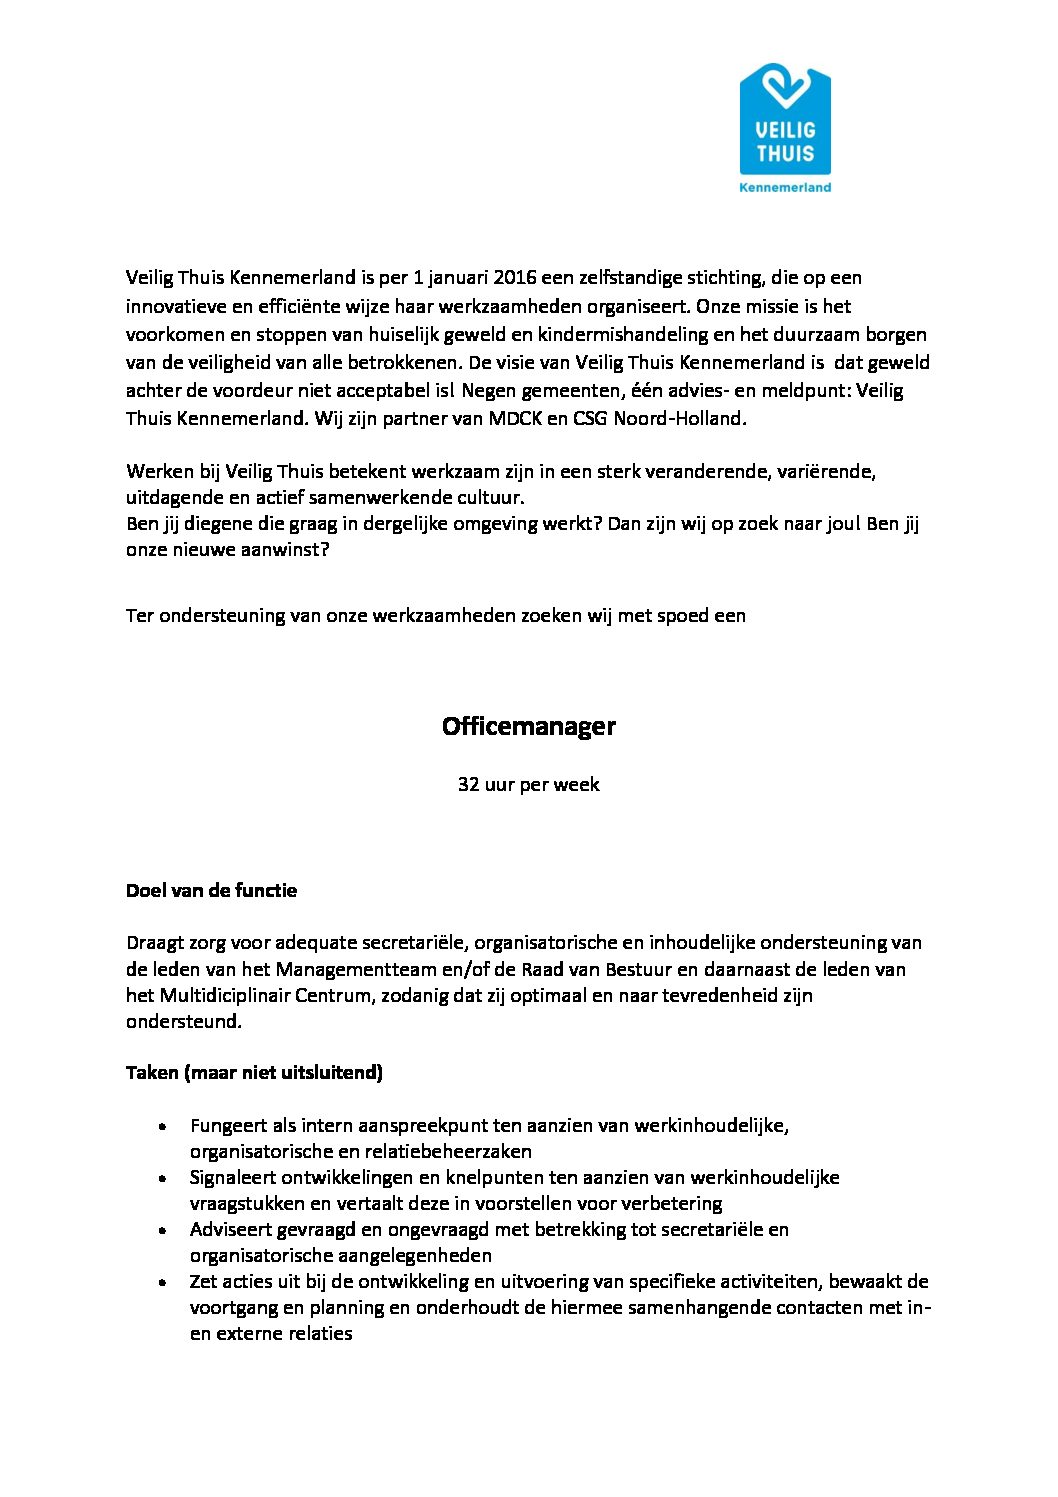 Vacature Officemanager – Veilig Thuis Kennemerland